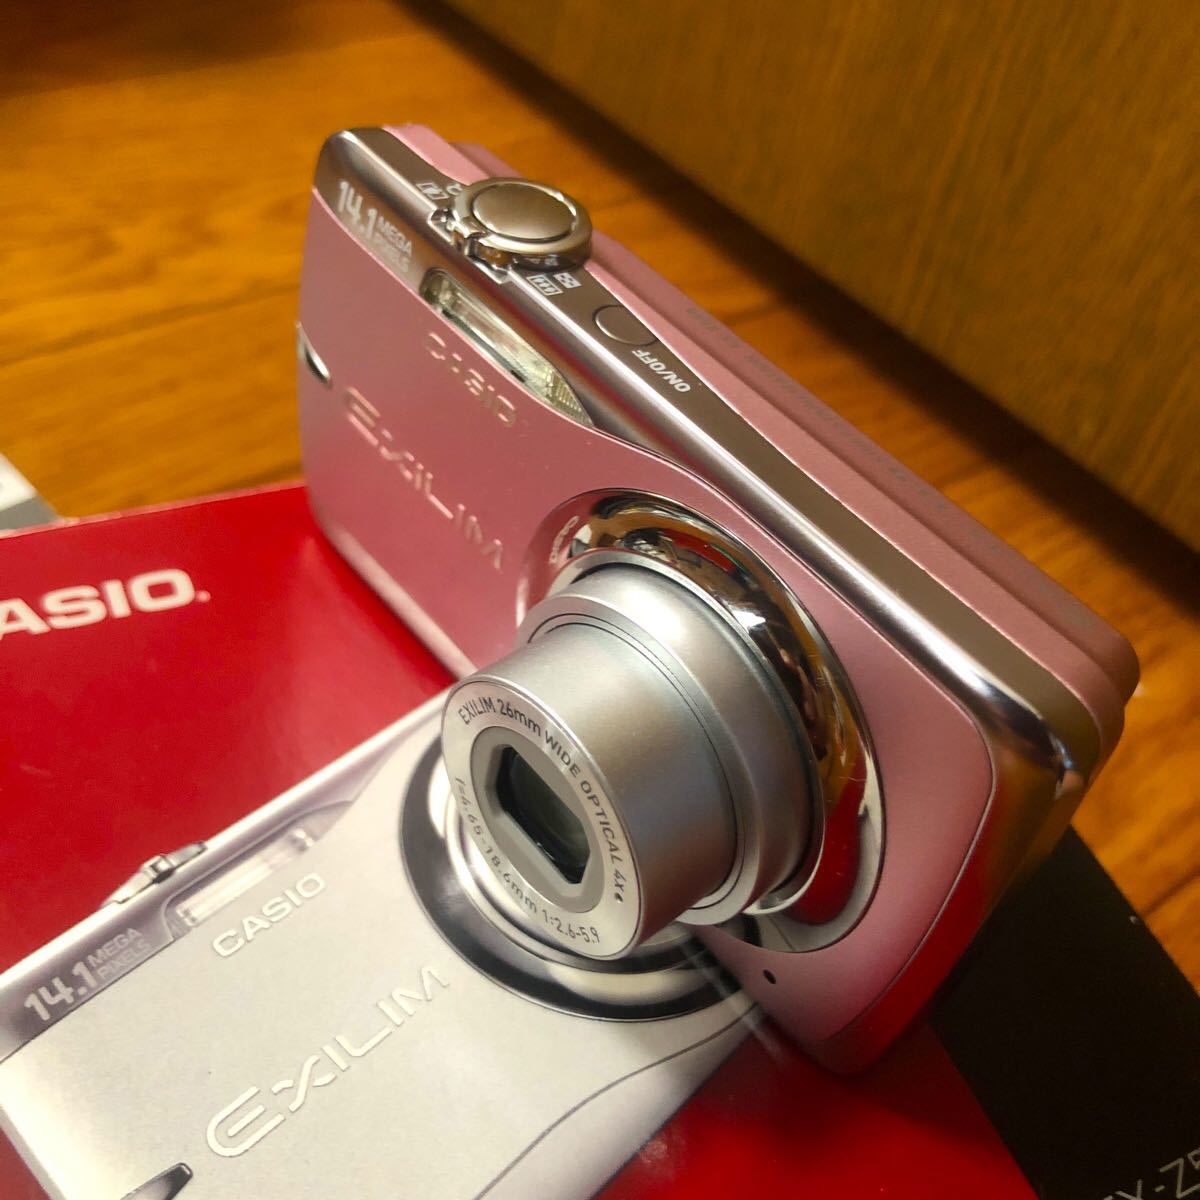 CASIO デジタルカメラ EXILIM EX-Z550 ピンク EX-Z550PK 簡易動作確認済